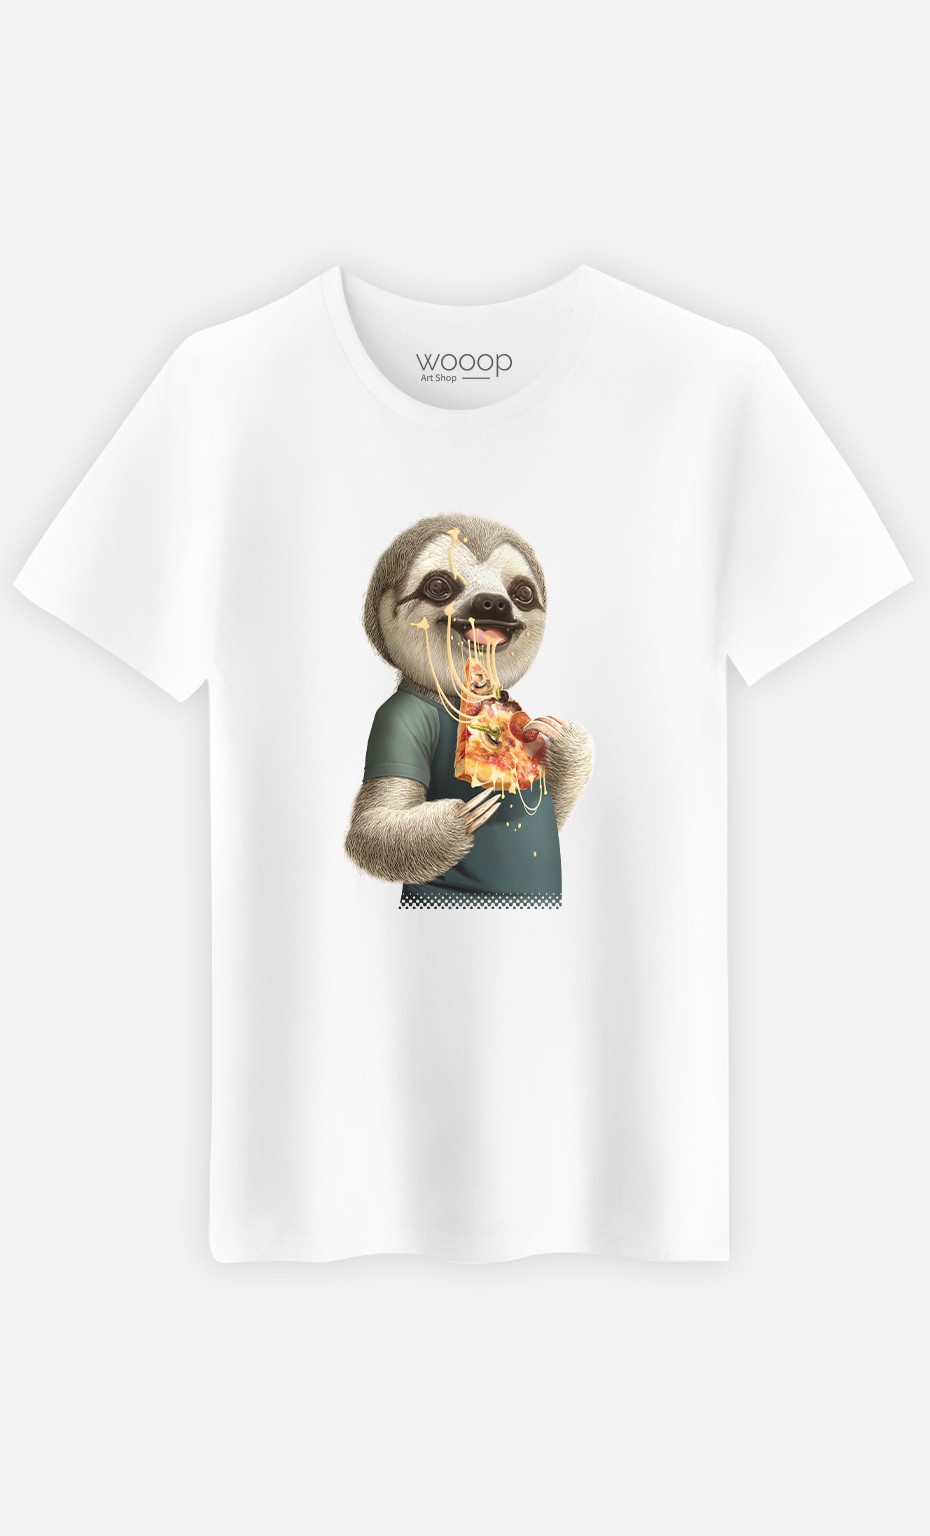 T-shirt Man Sloth Eat Pizza